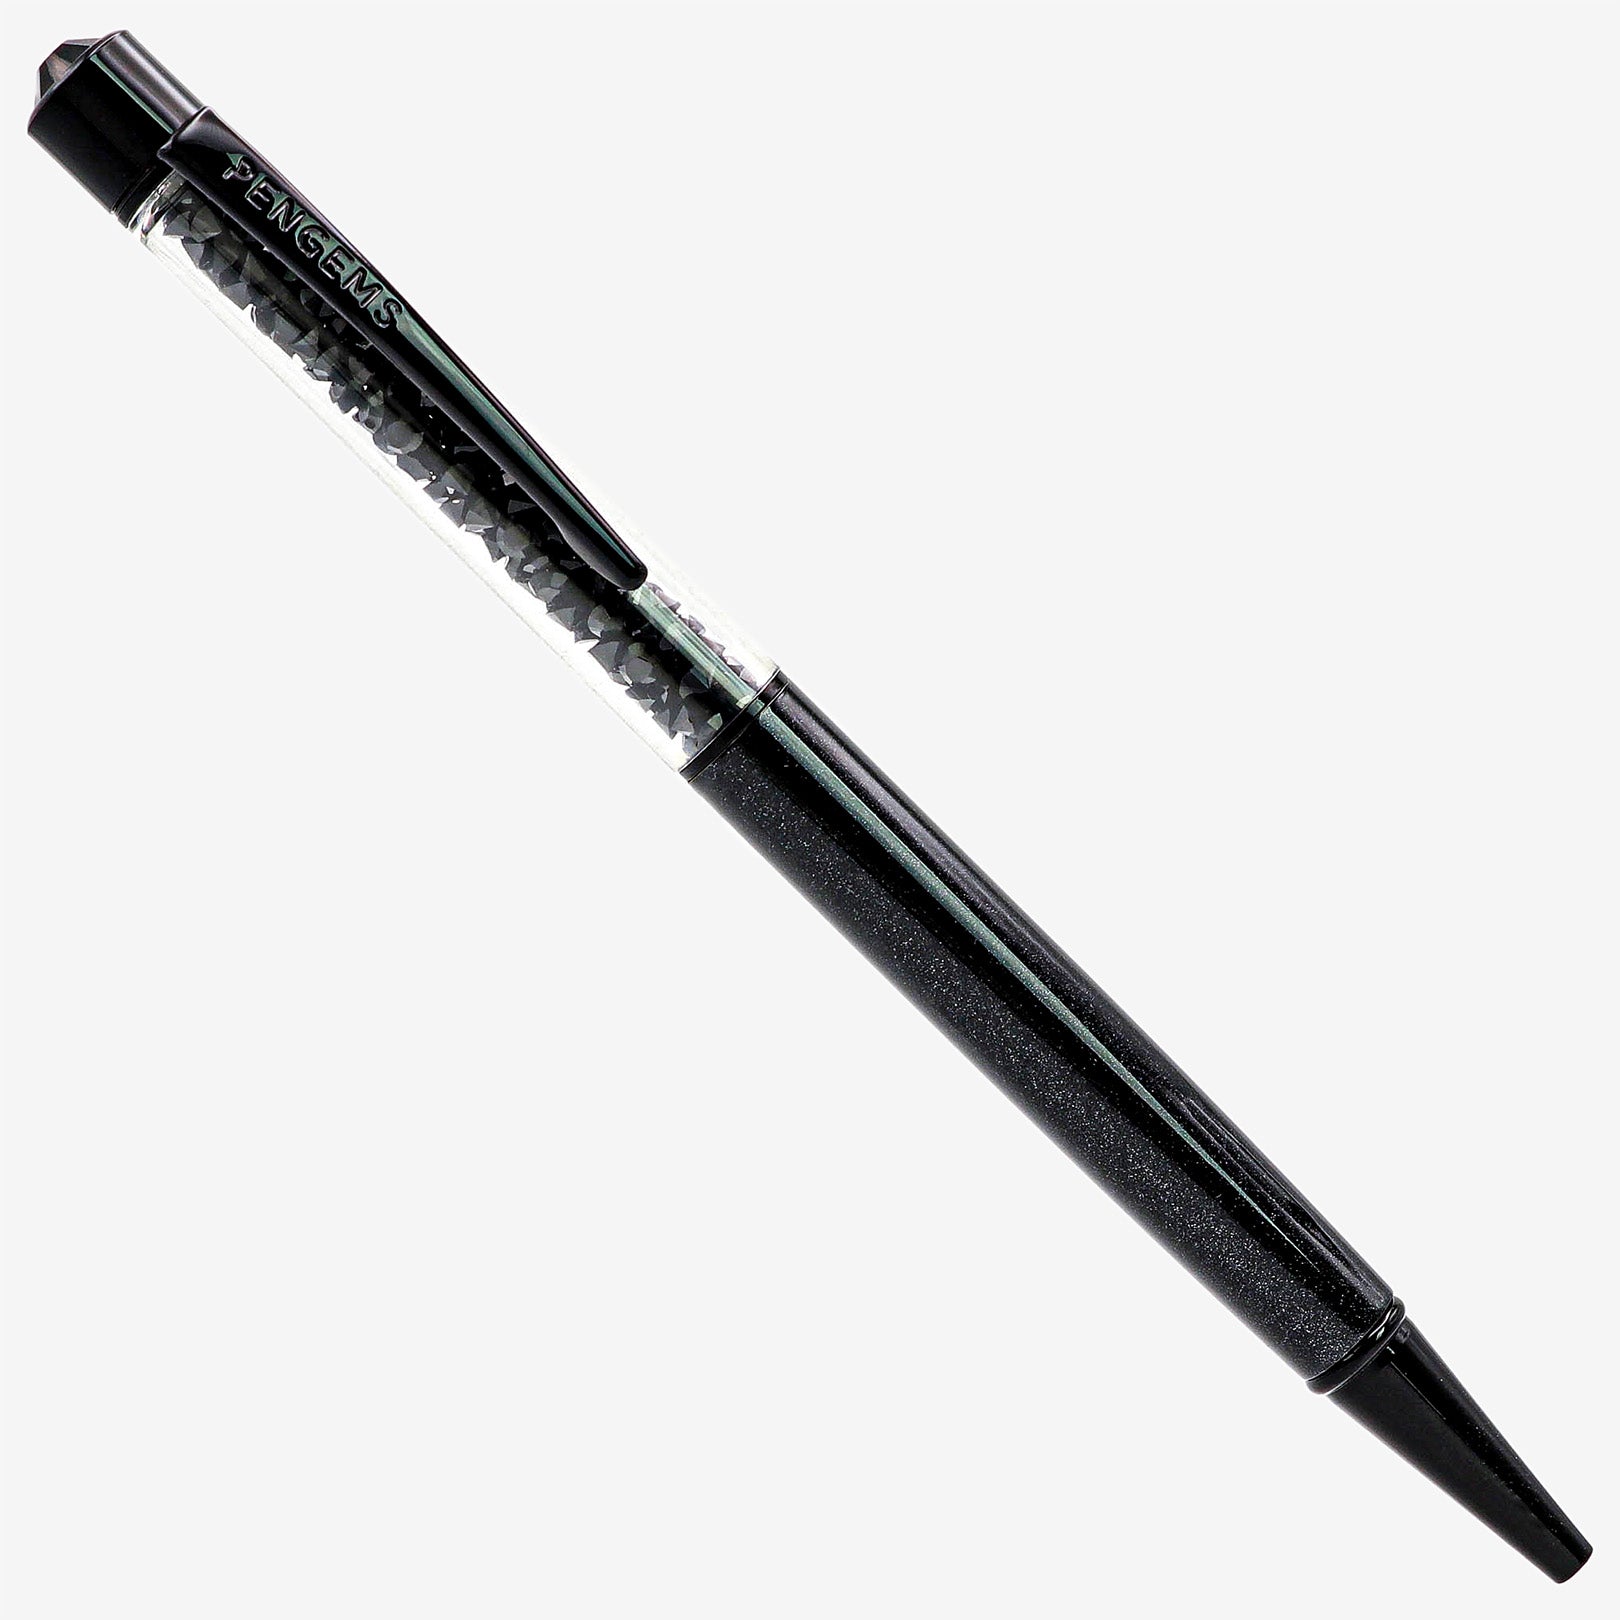 PENGEMS Black Magic Crystal Pen